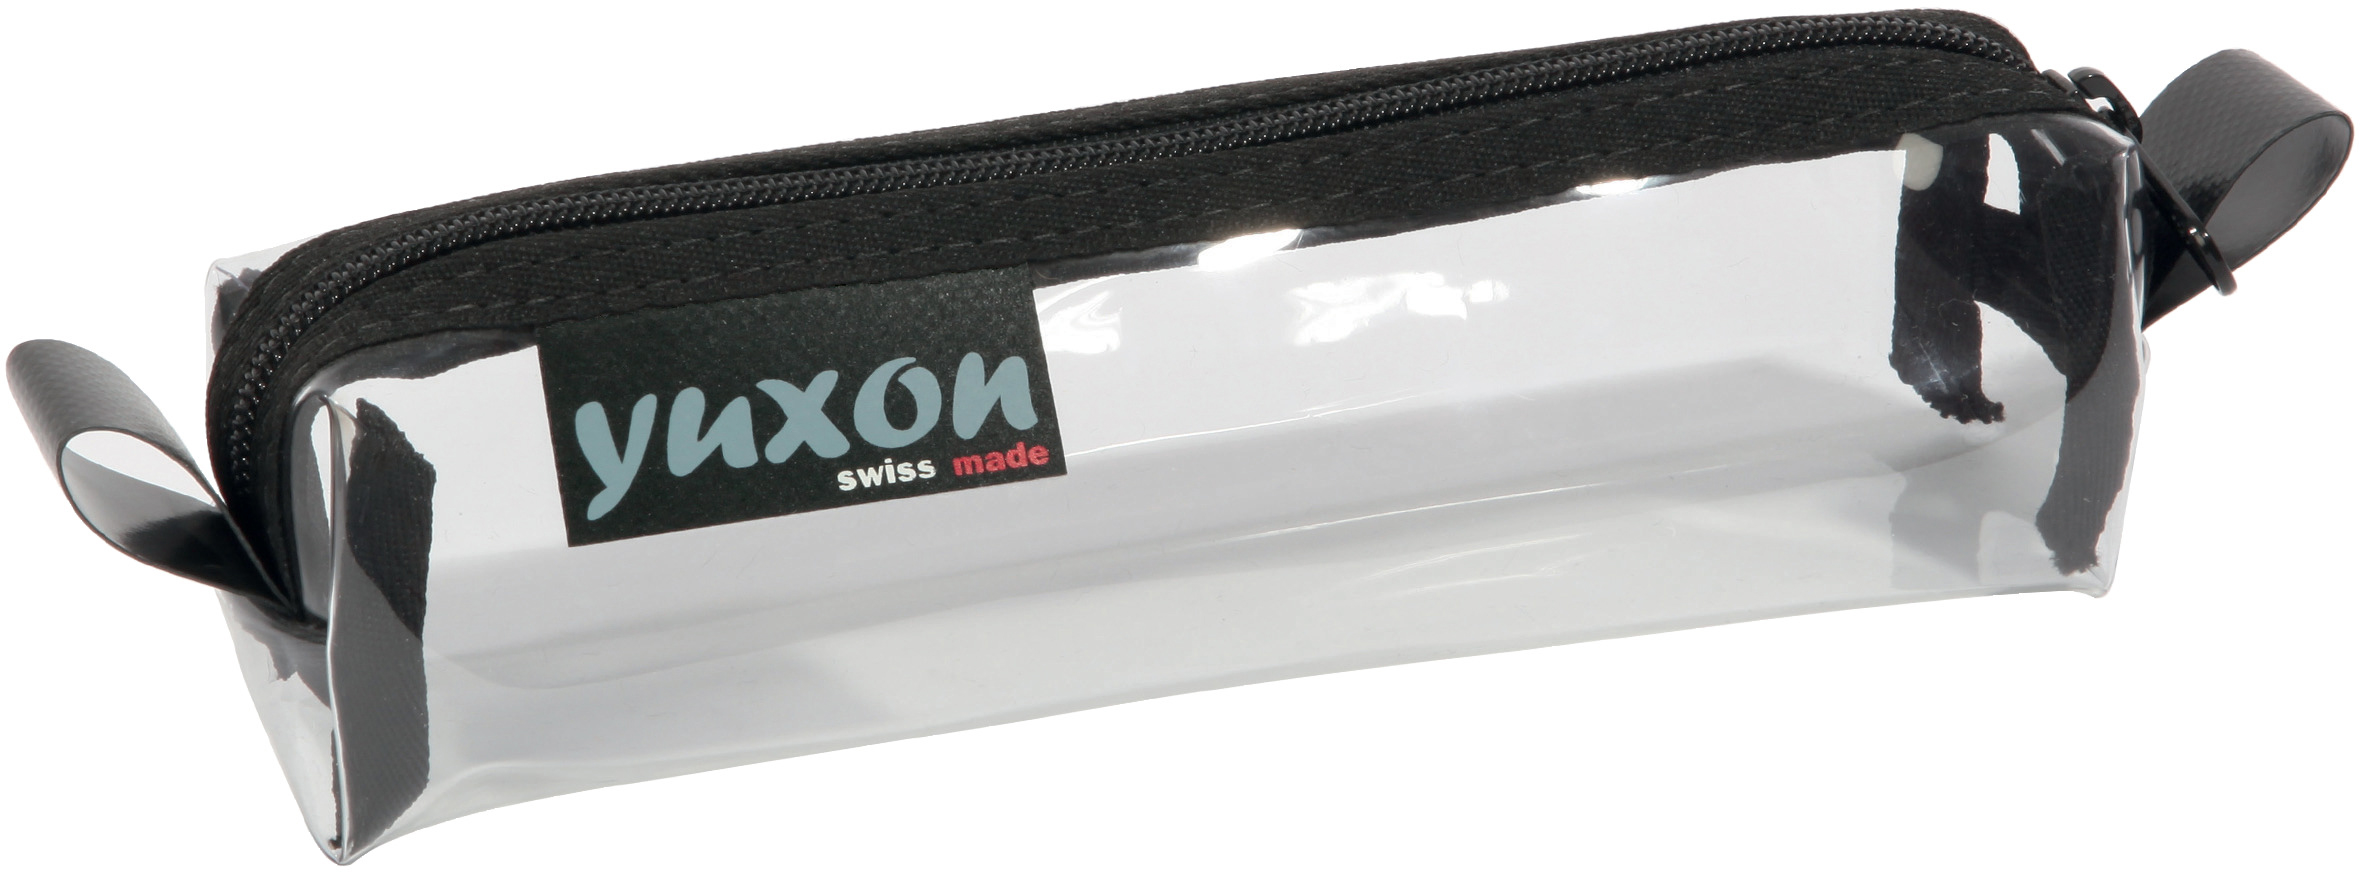 YUXON trousse midi 8910.20 transparent 200x50x40mm